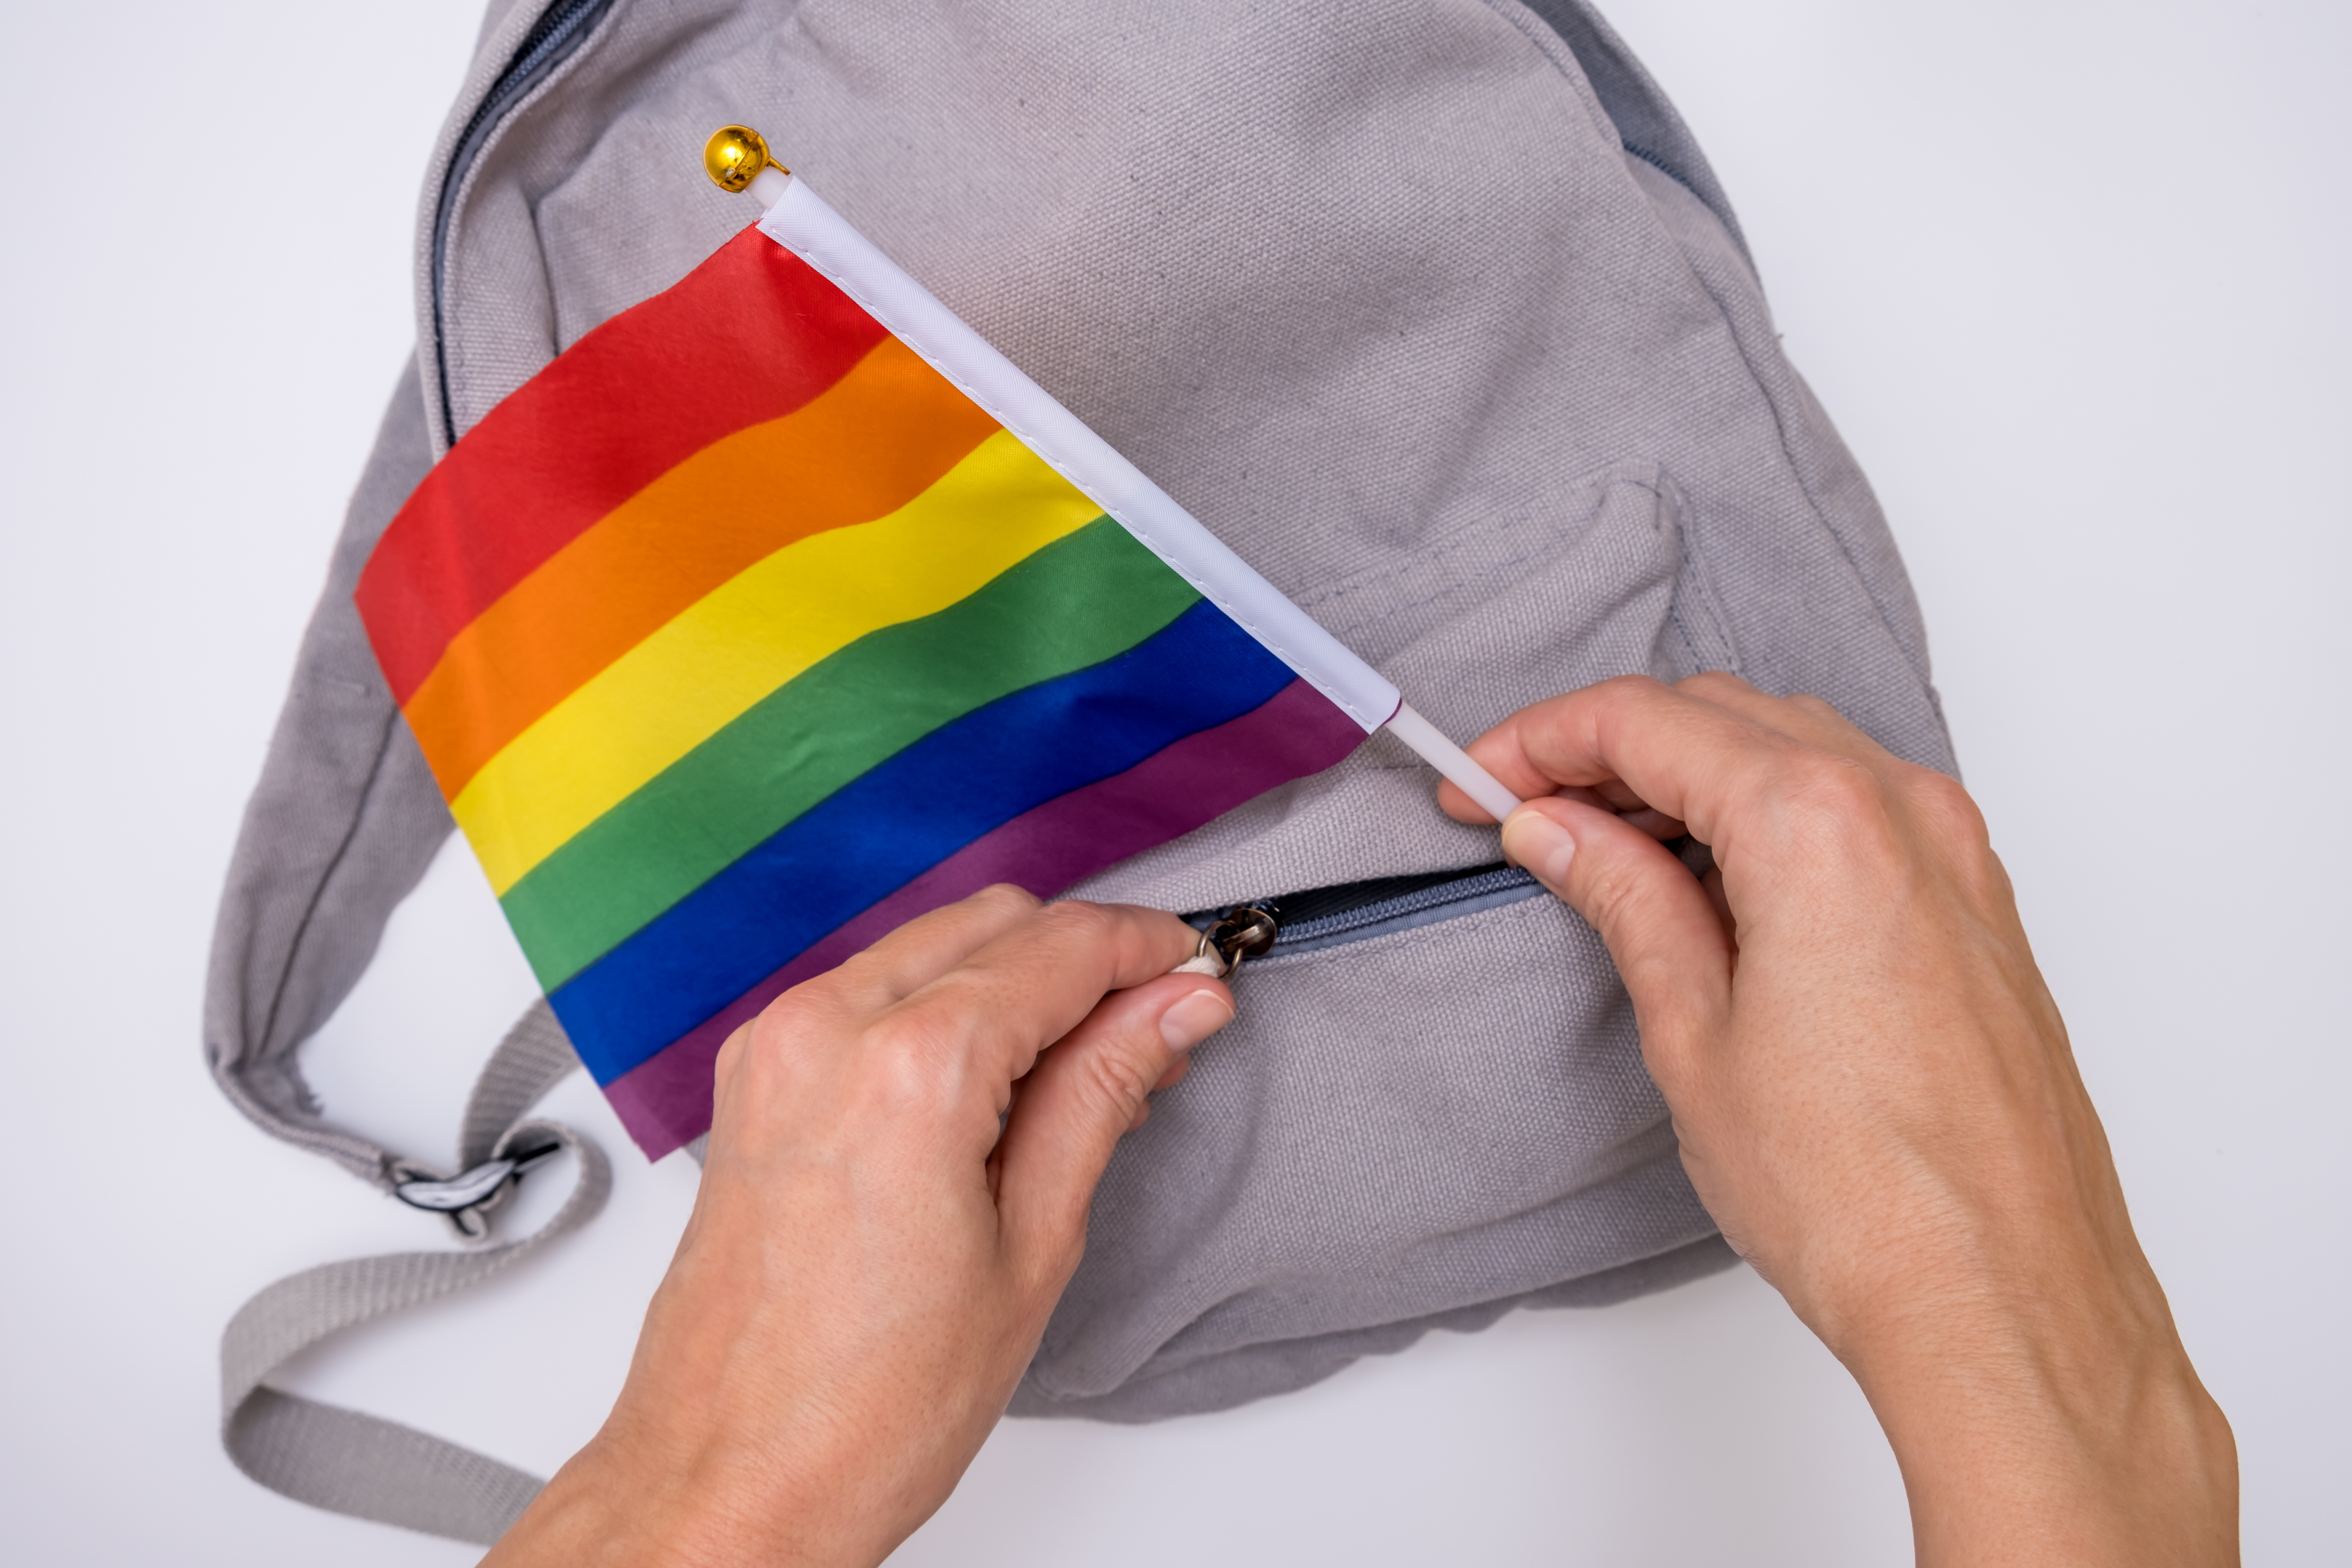 Backpack with rainbow flag